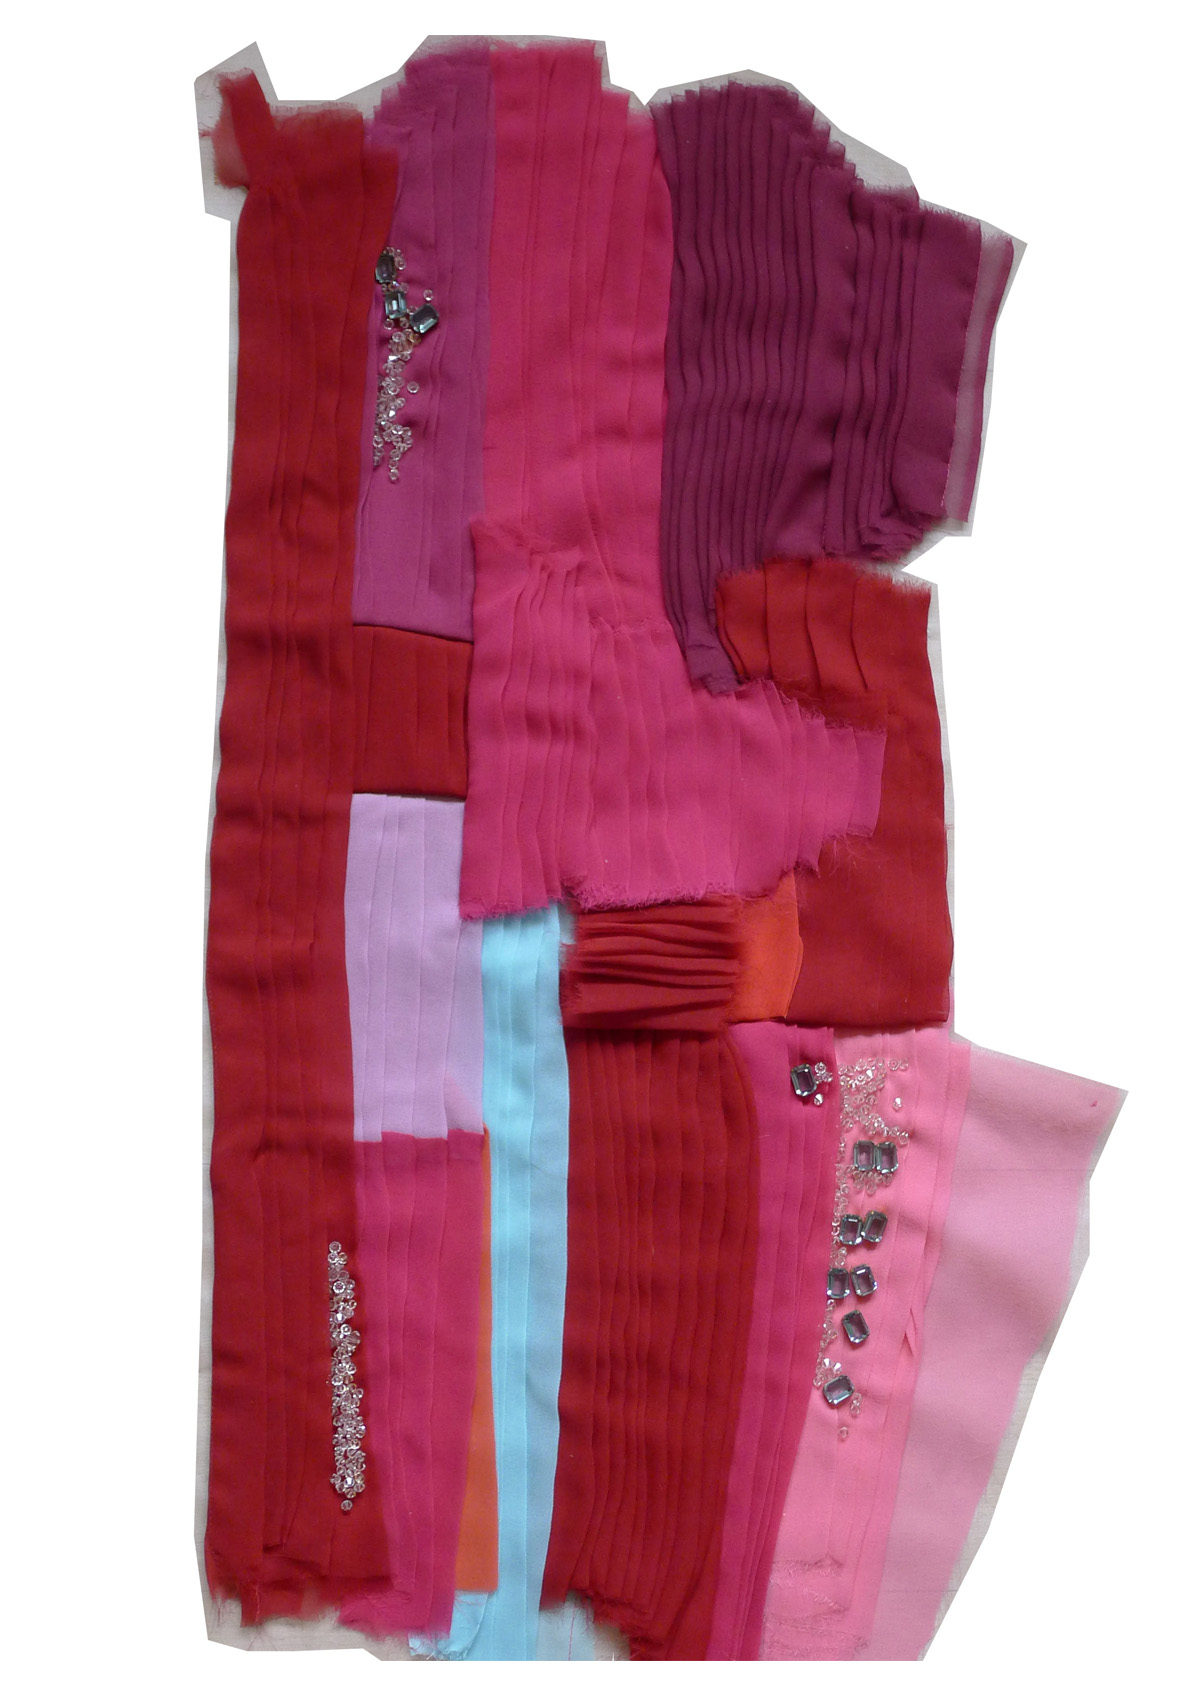 V for VB [Victoria Beckham] - fabric development 